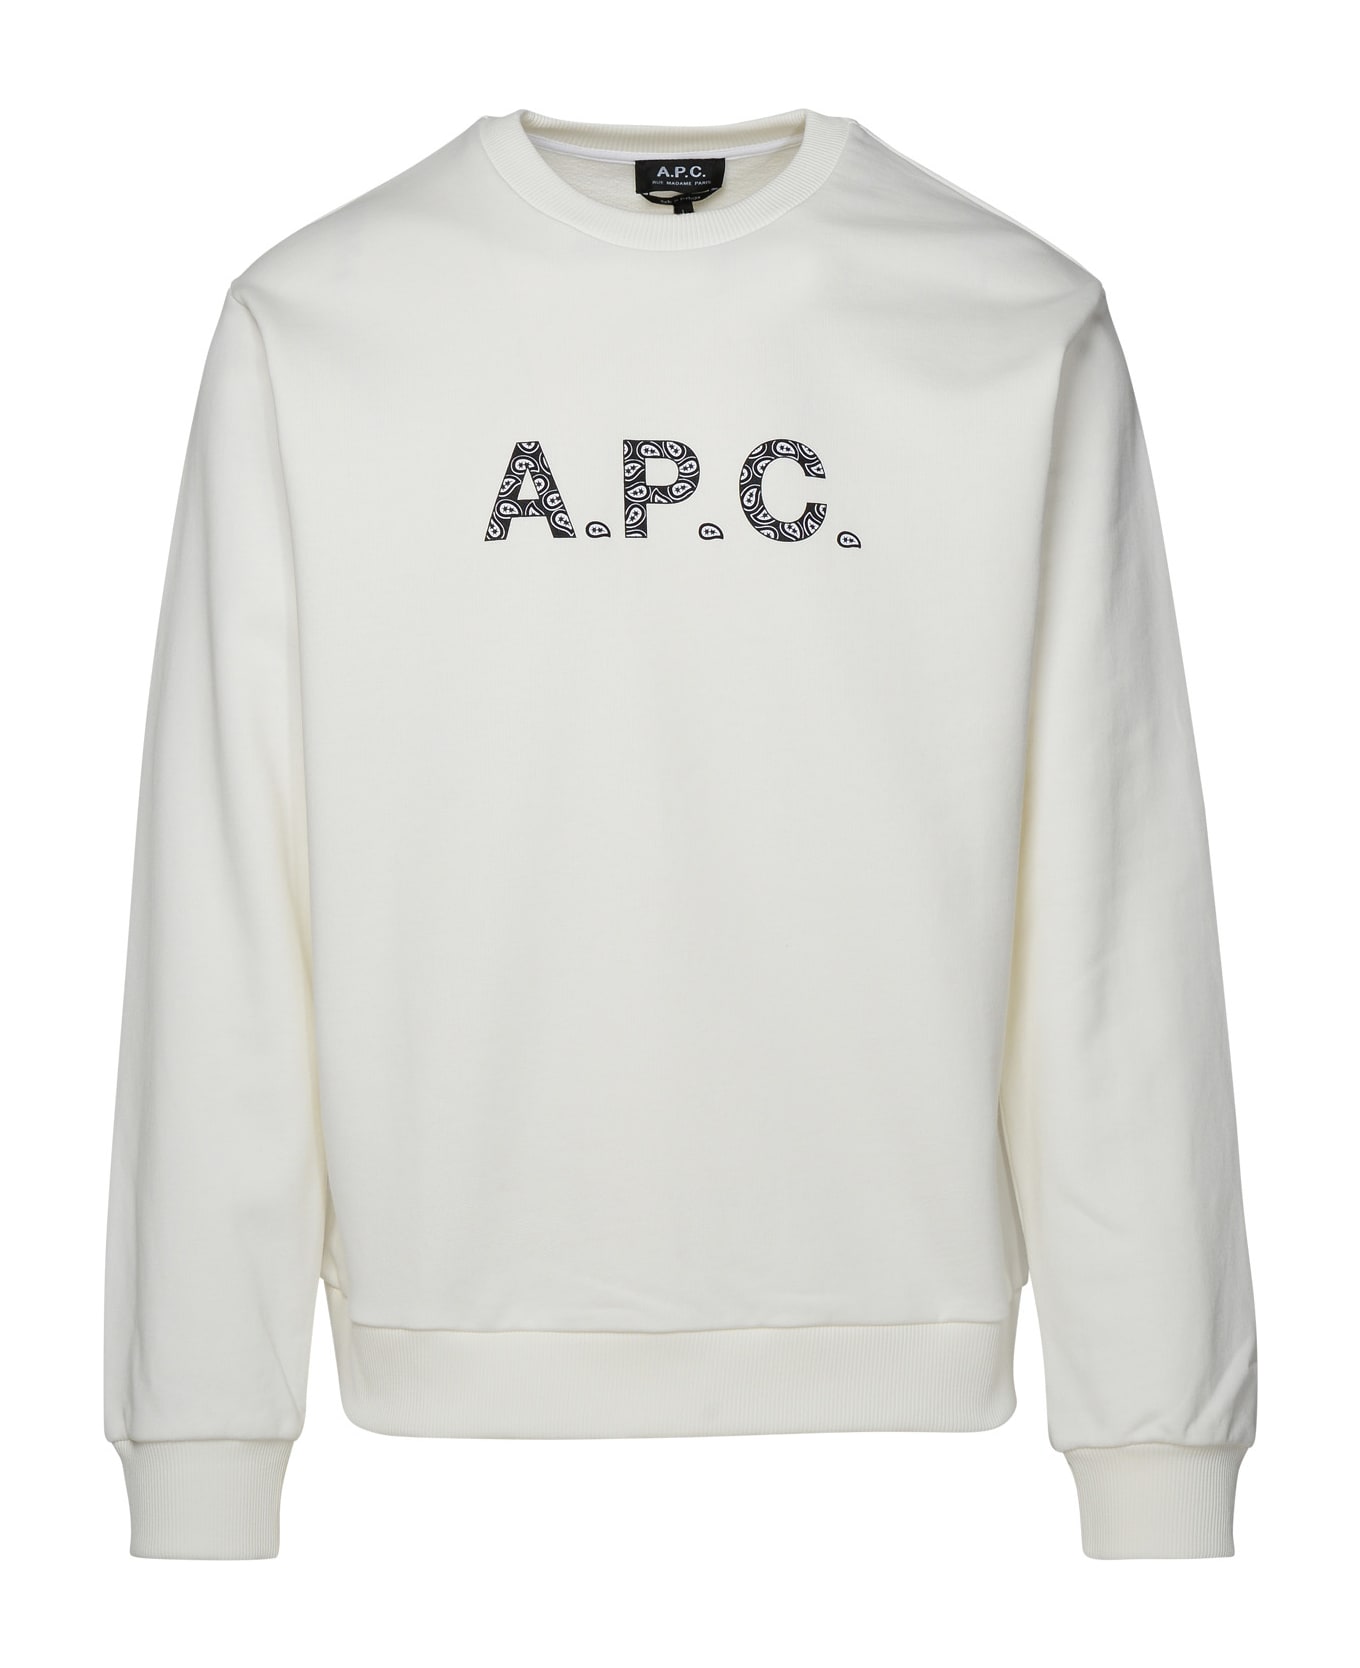 A.P.C. Timothy Sweatshirt - WHITE BLACK